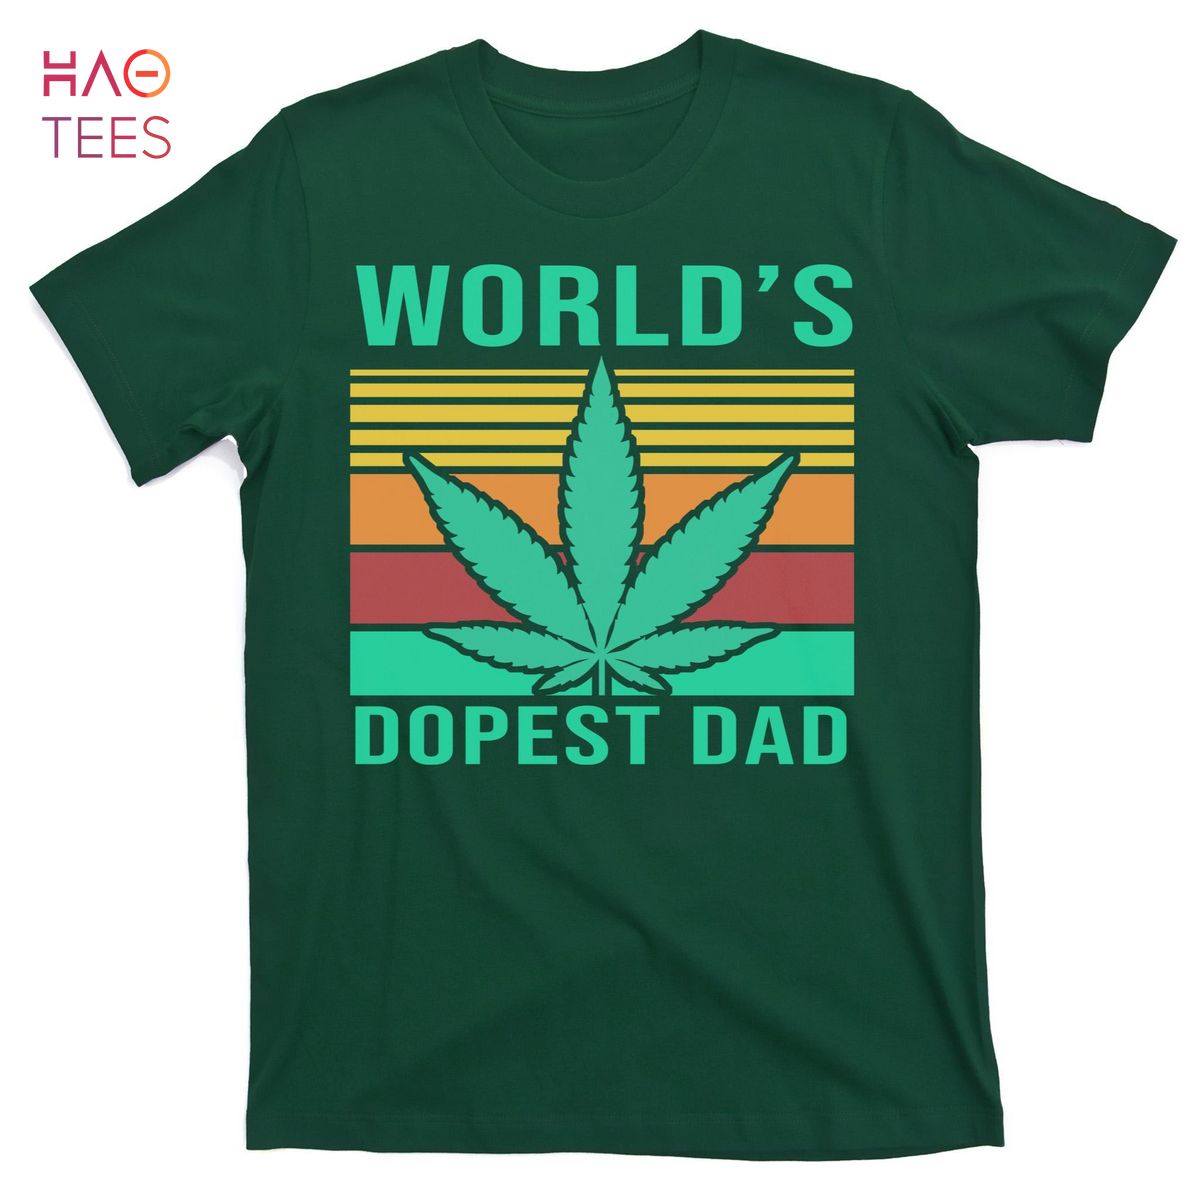 HOT World's Dopest Dad Funny Retro T-Shirts